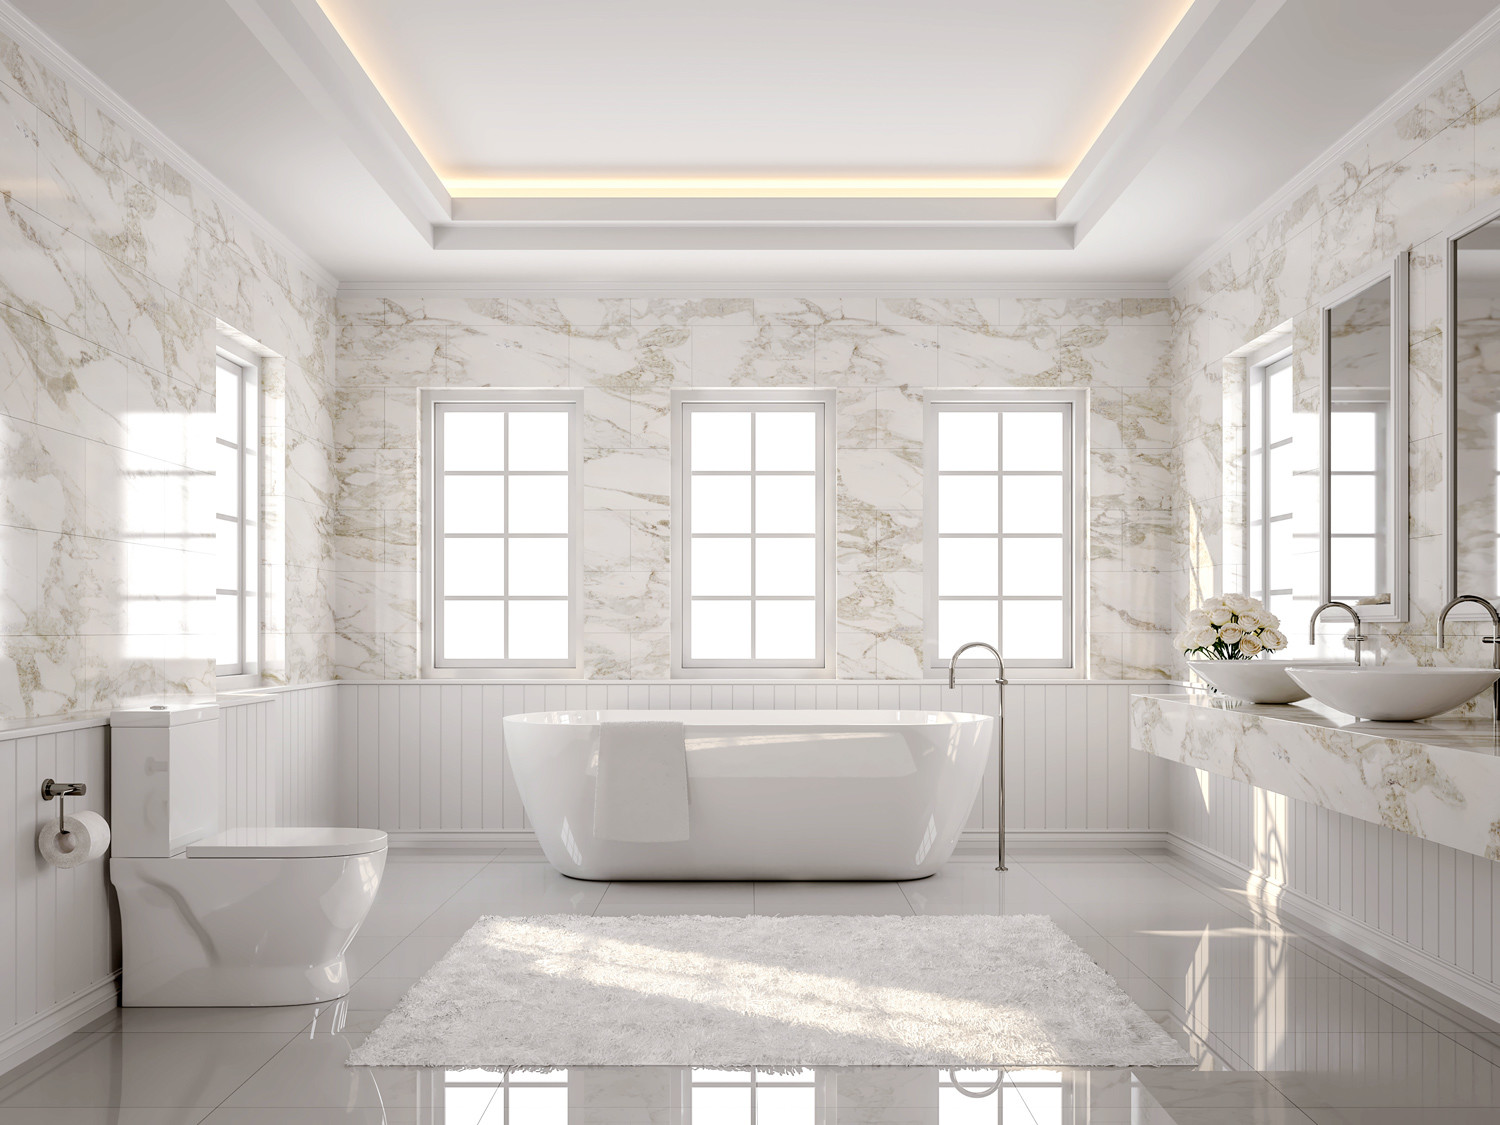 Top 10 Inspiring Bathroom Tile Trends, Bathroom Tiles Designs And Colors